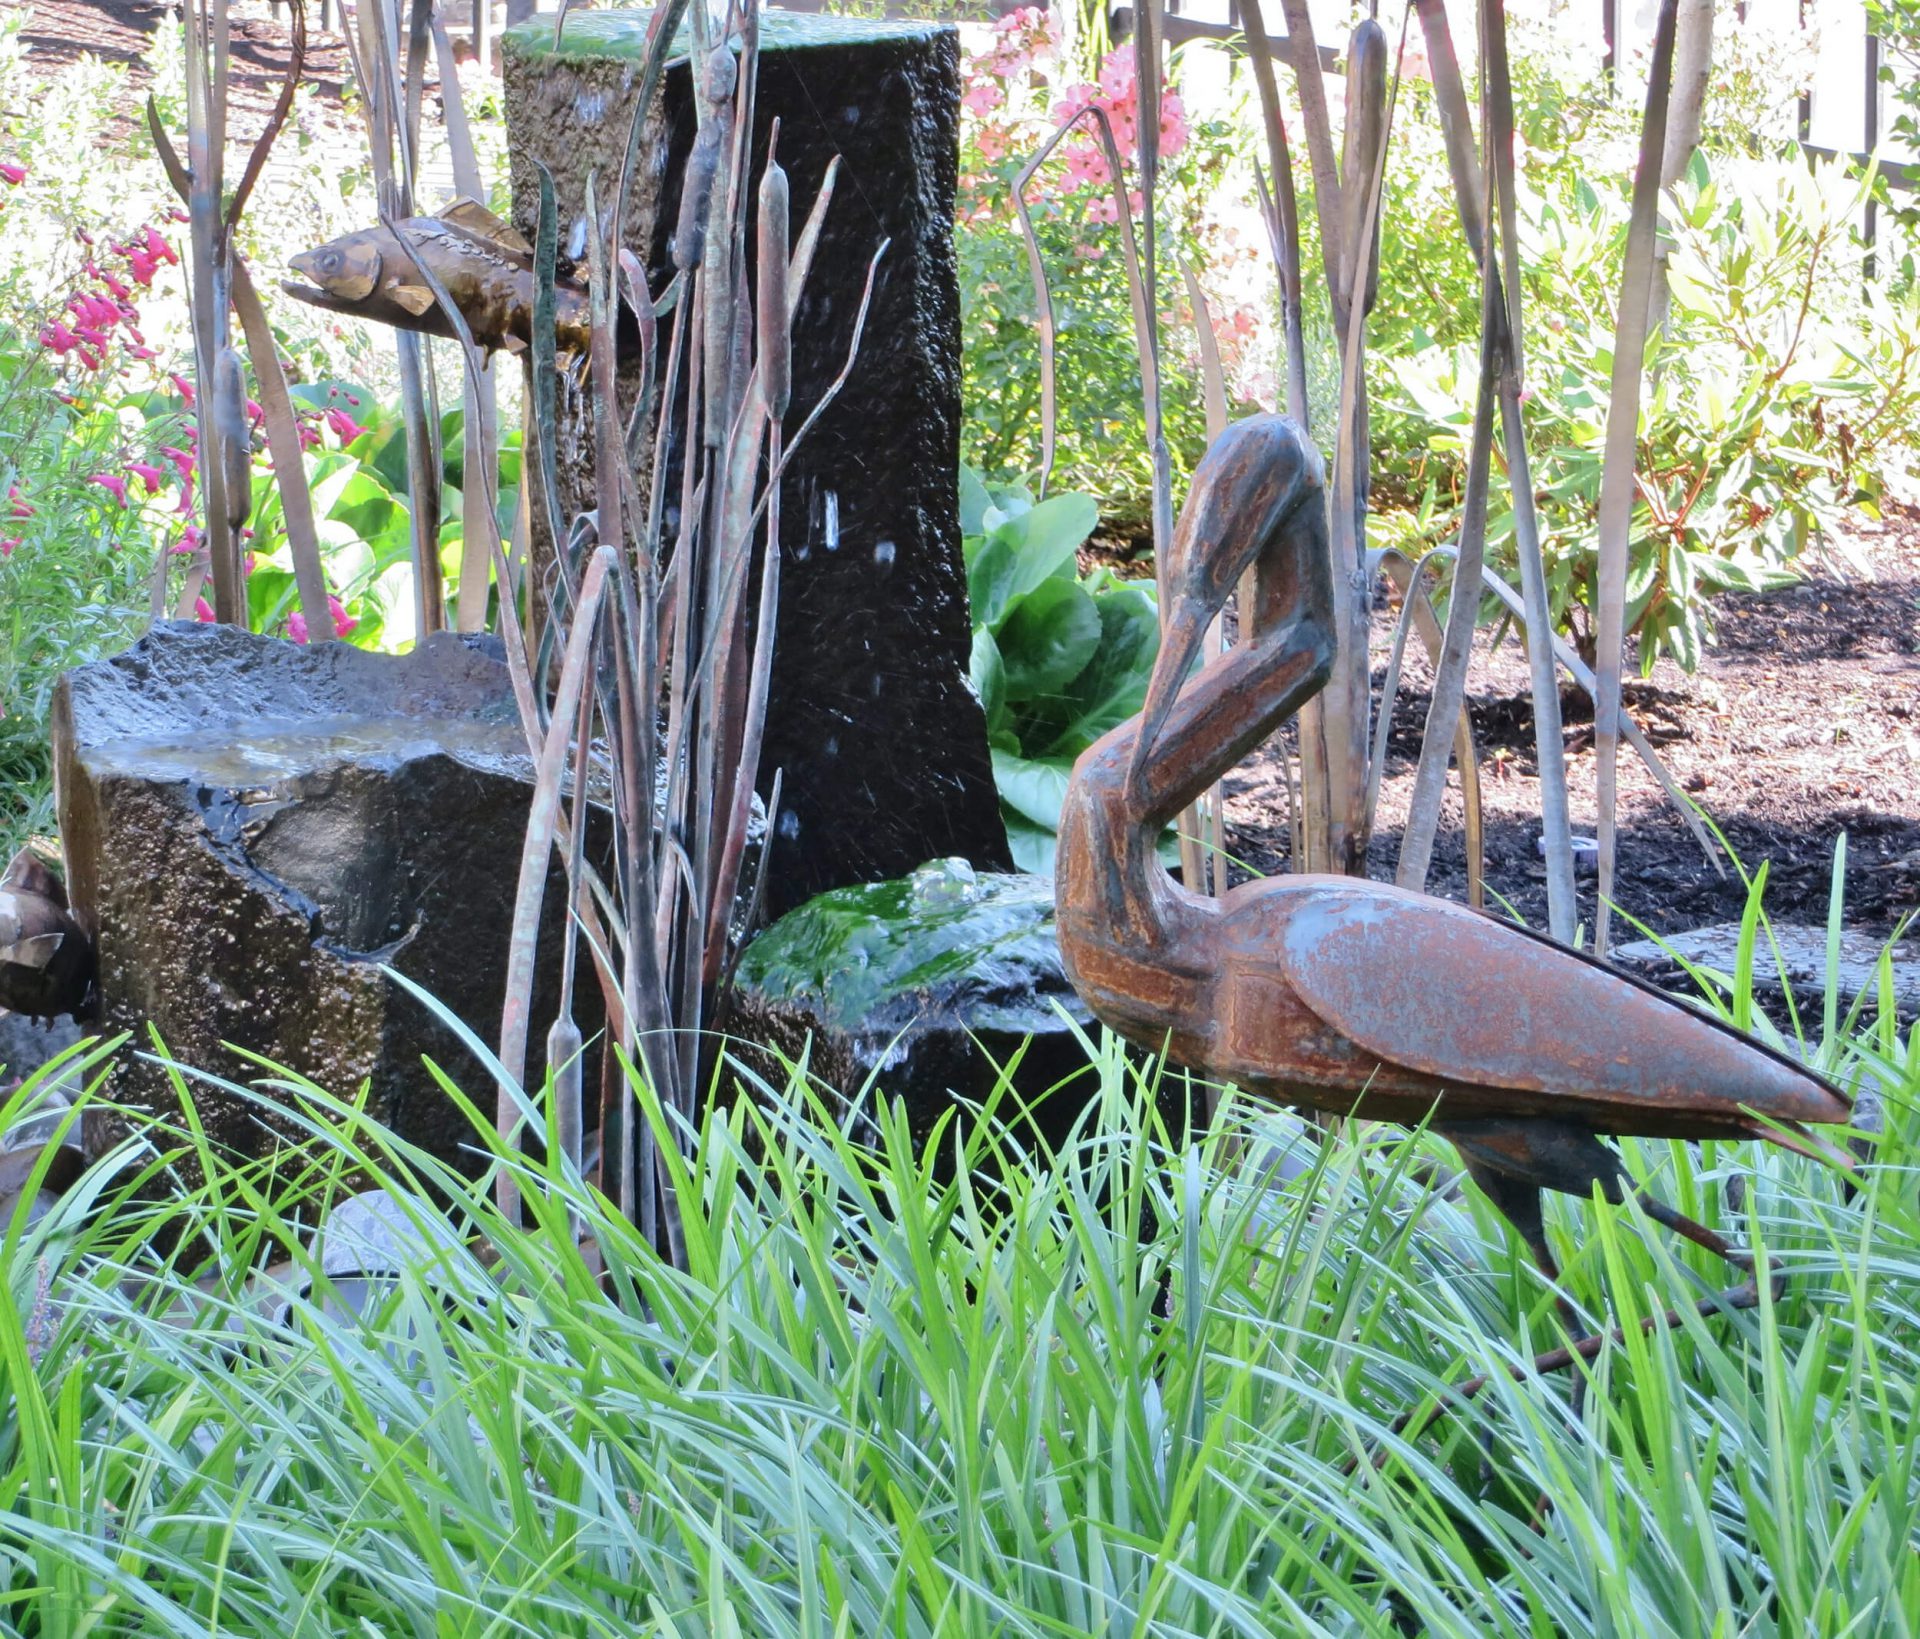 Statue of a blue heron in an outdoor campus garden.